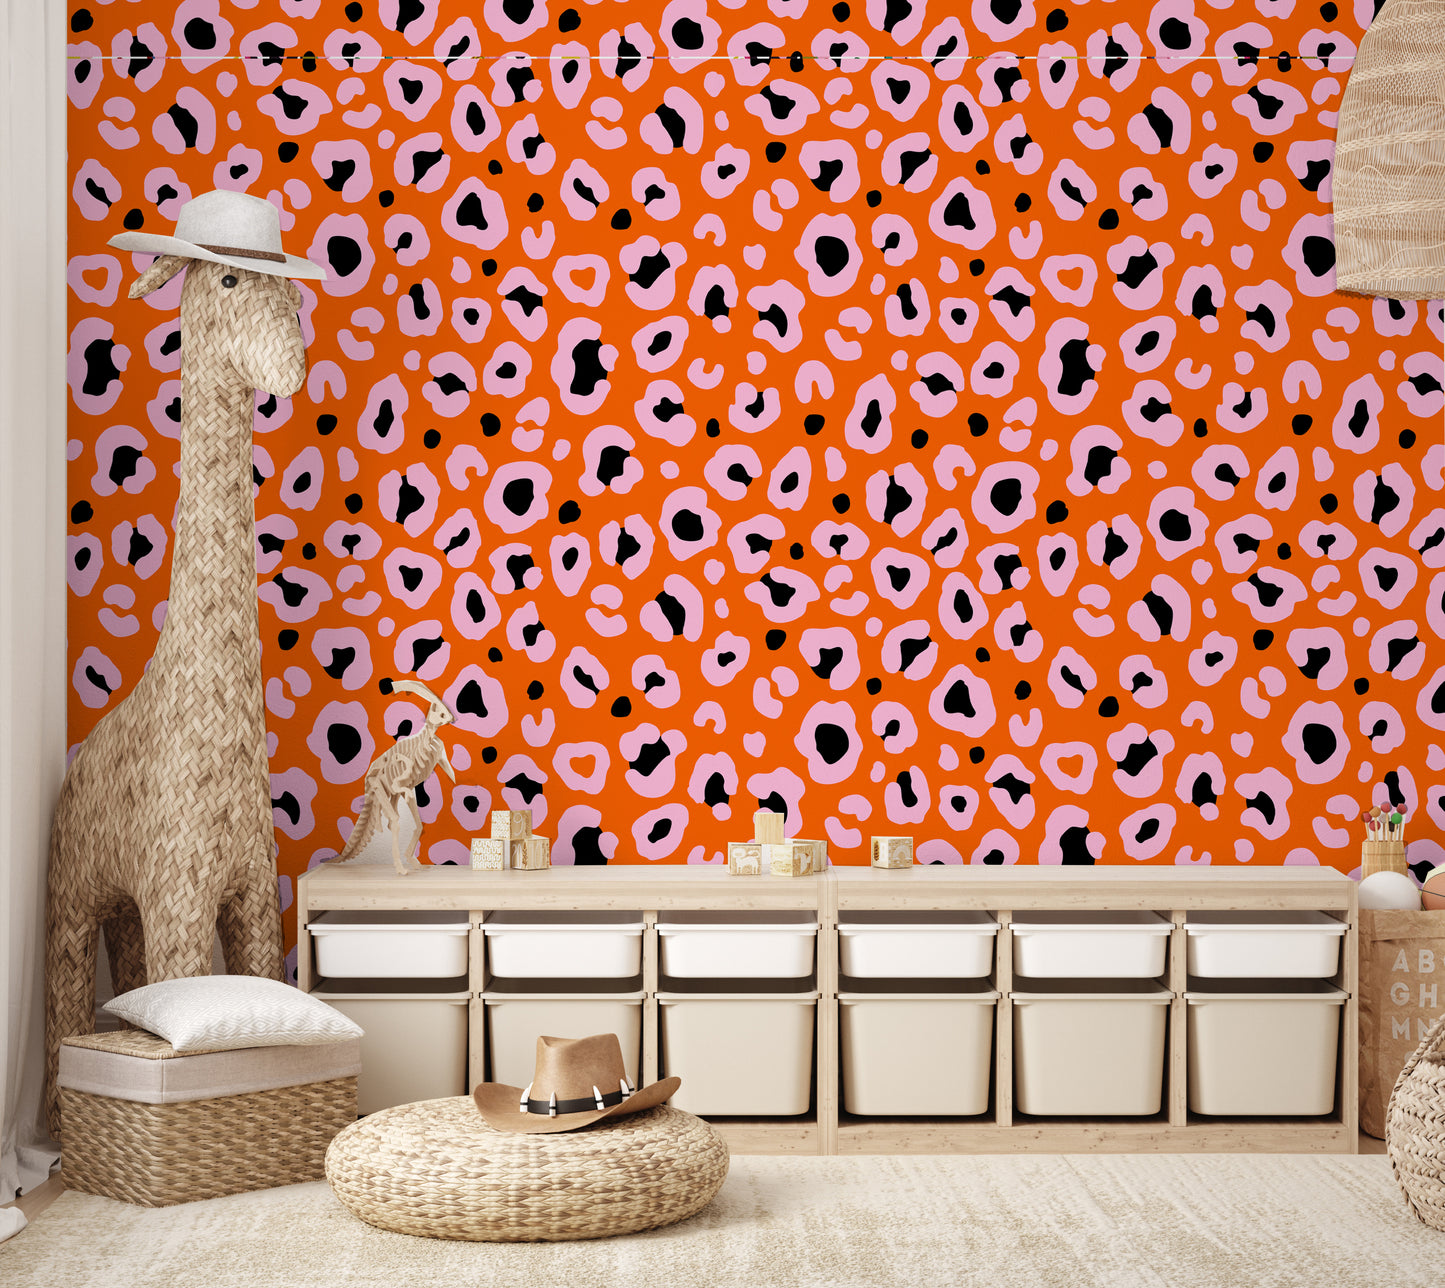 Modern Cheetah Print Removable Peel And Stick Wallpaper